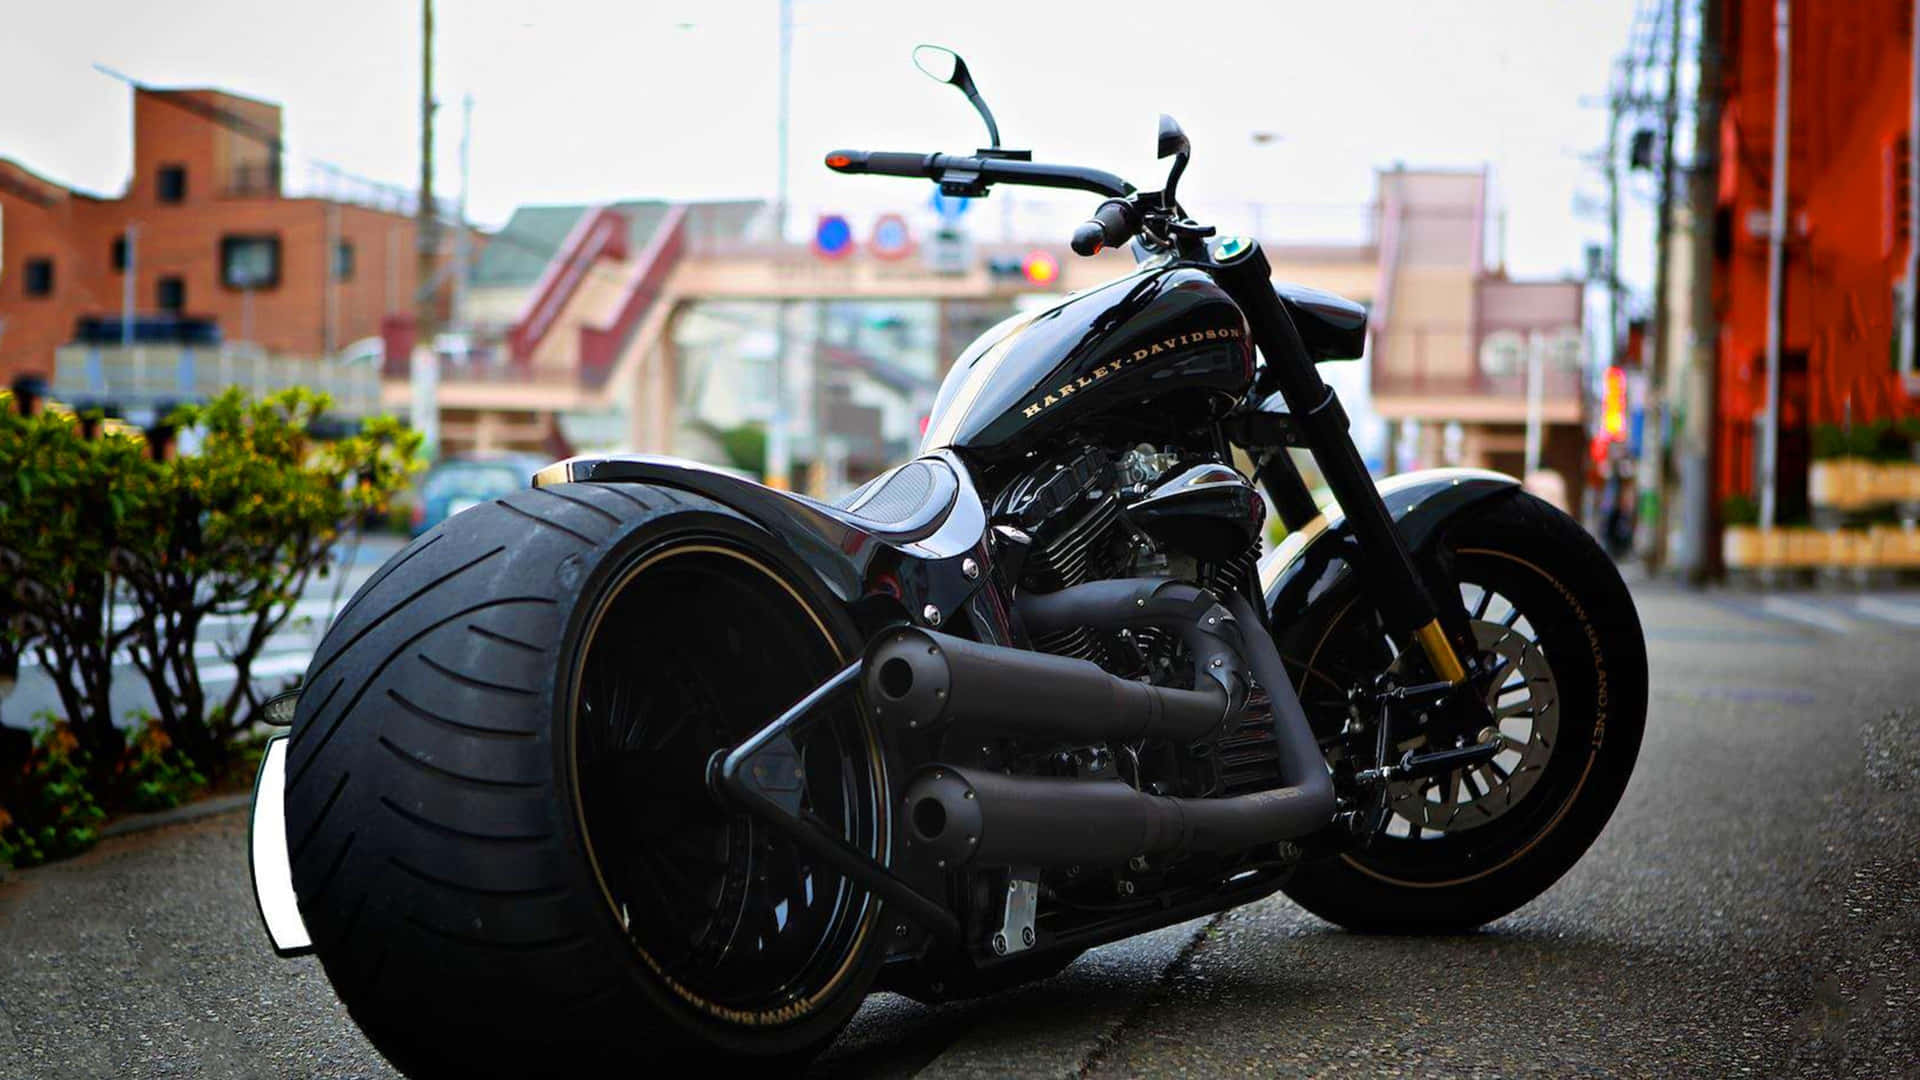 Harley Davidson Motorcycle With Big Wheels Background